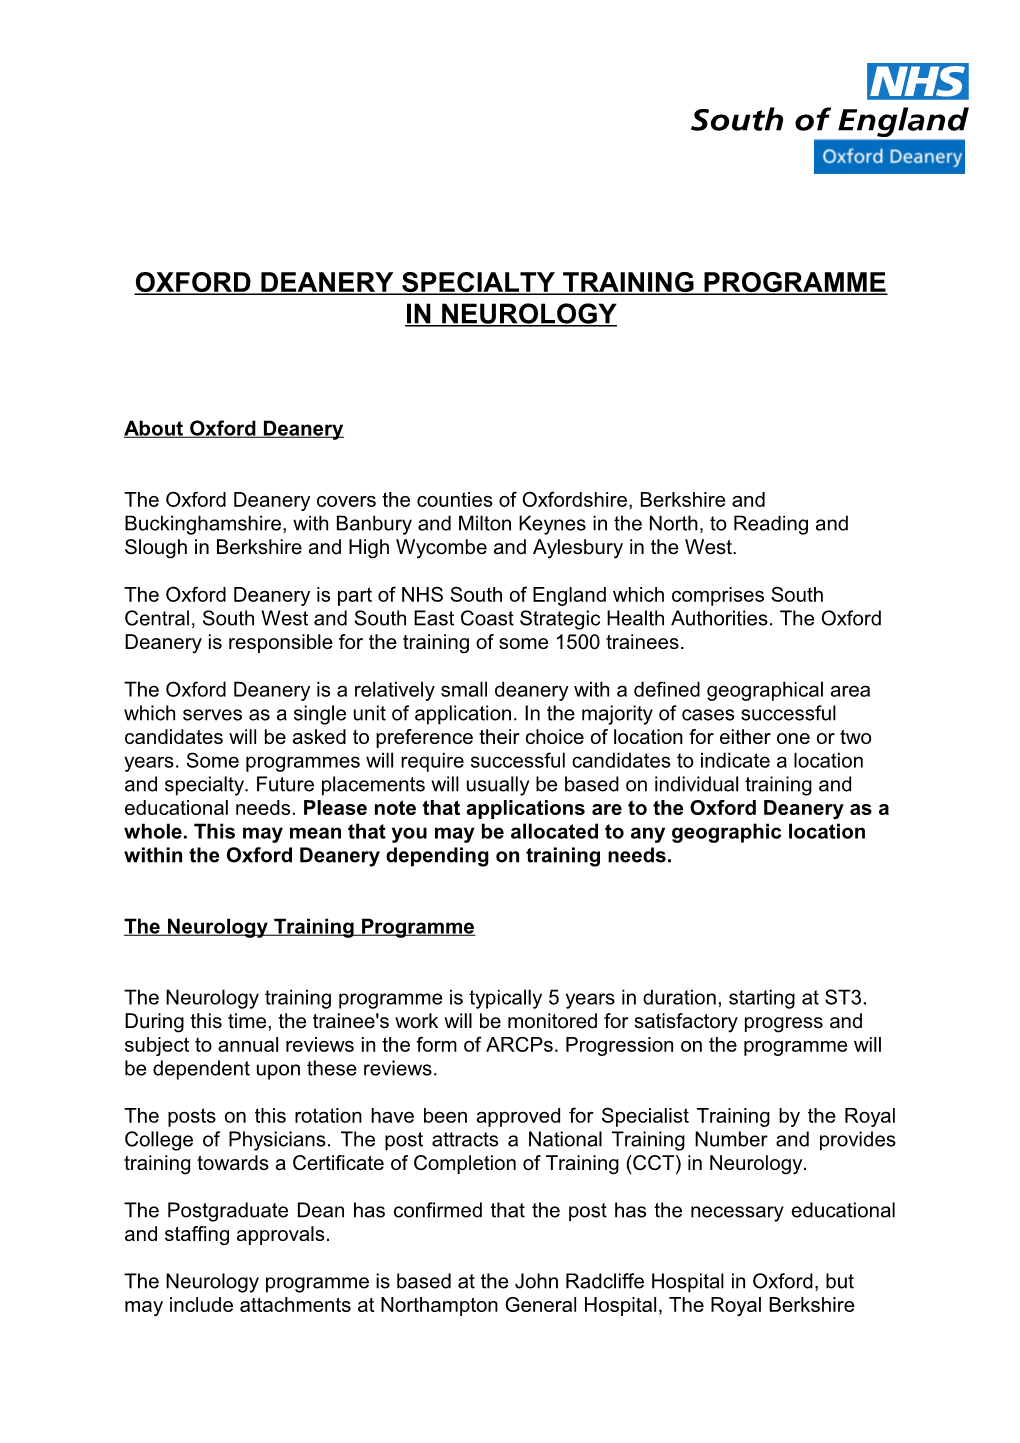 Oxford Deanery Specialty Training Programme in Neurology